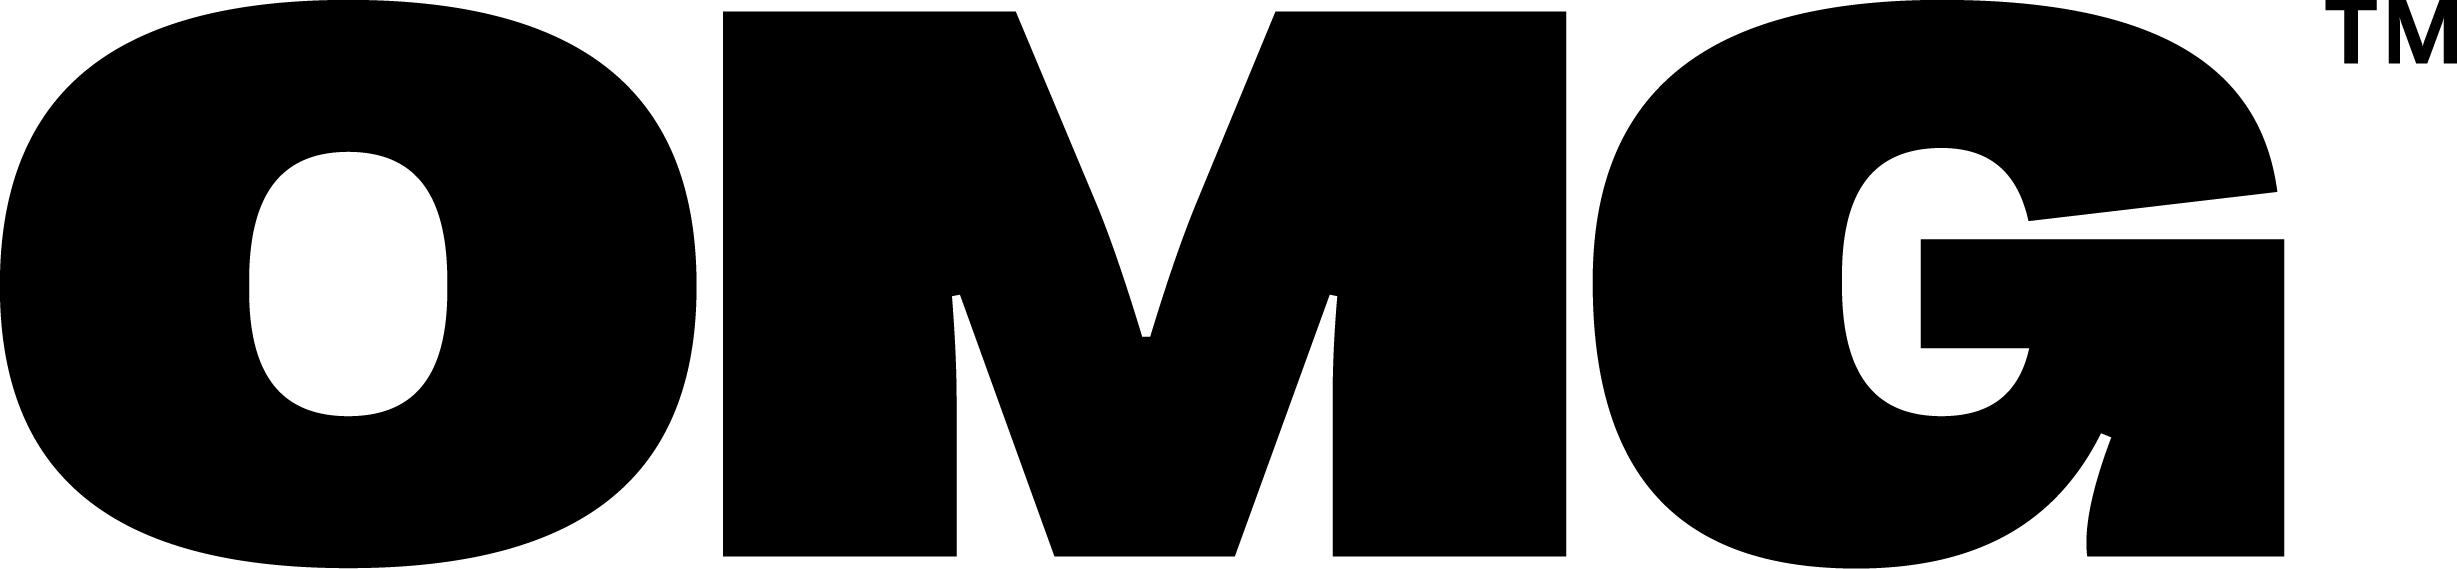 omg logo